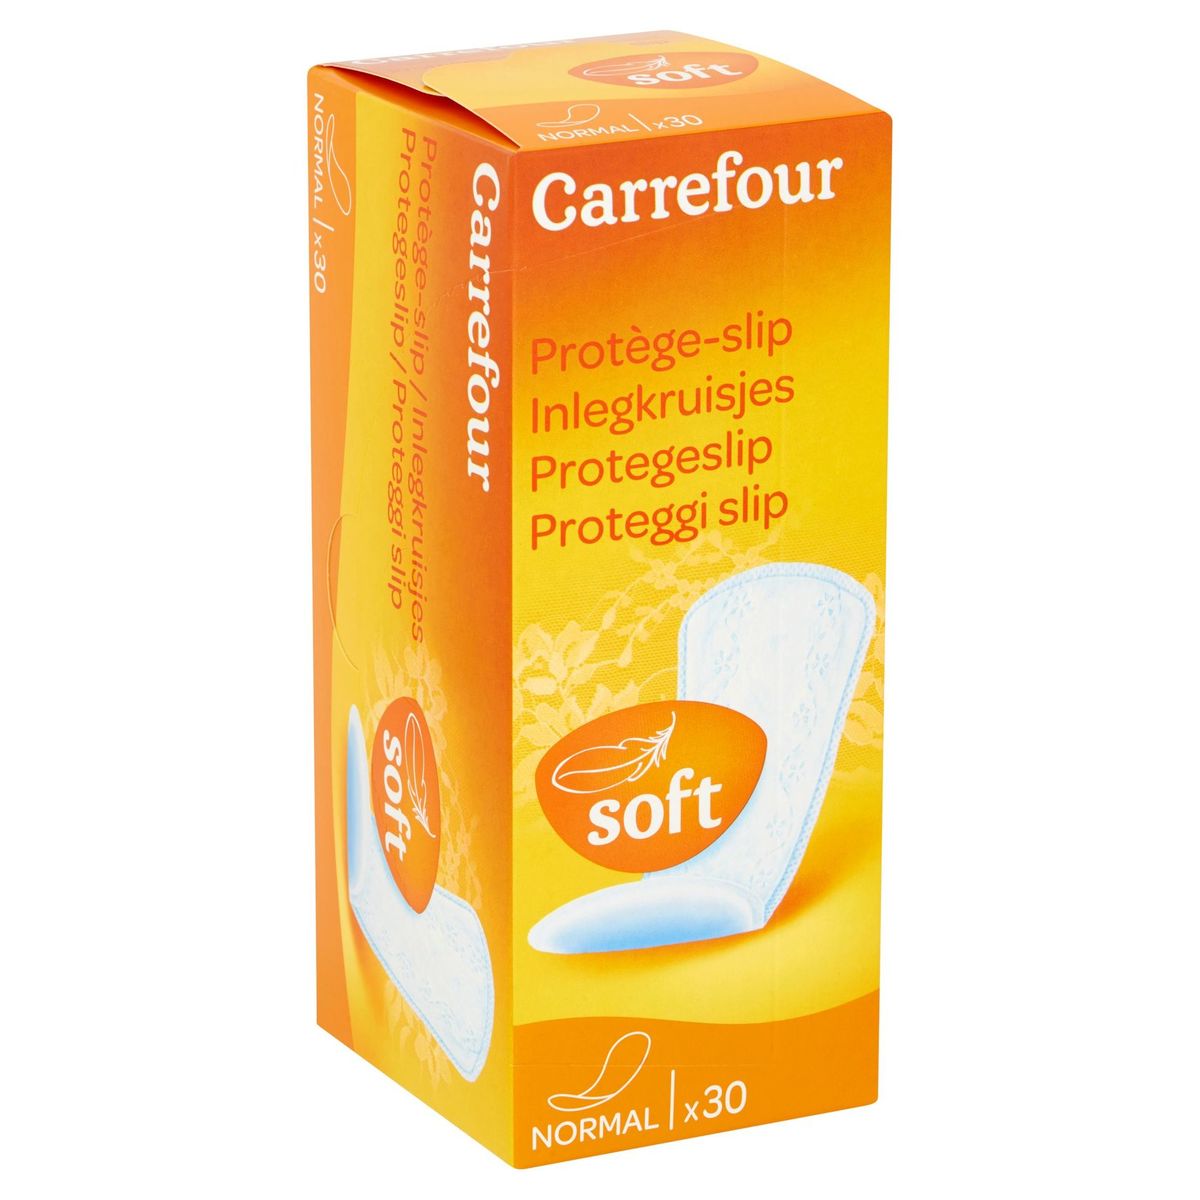 Carrefour Inlegkruisjes Soft Normal 30 Stuks